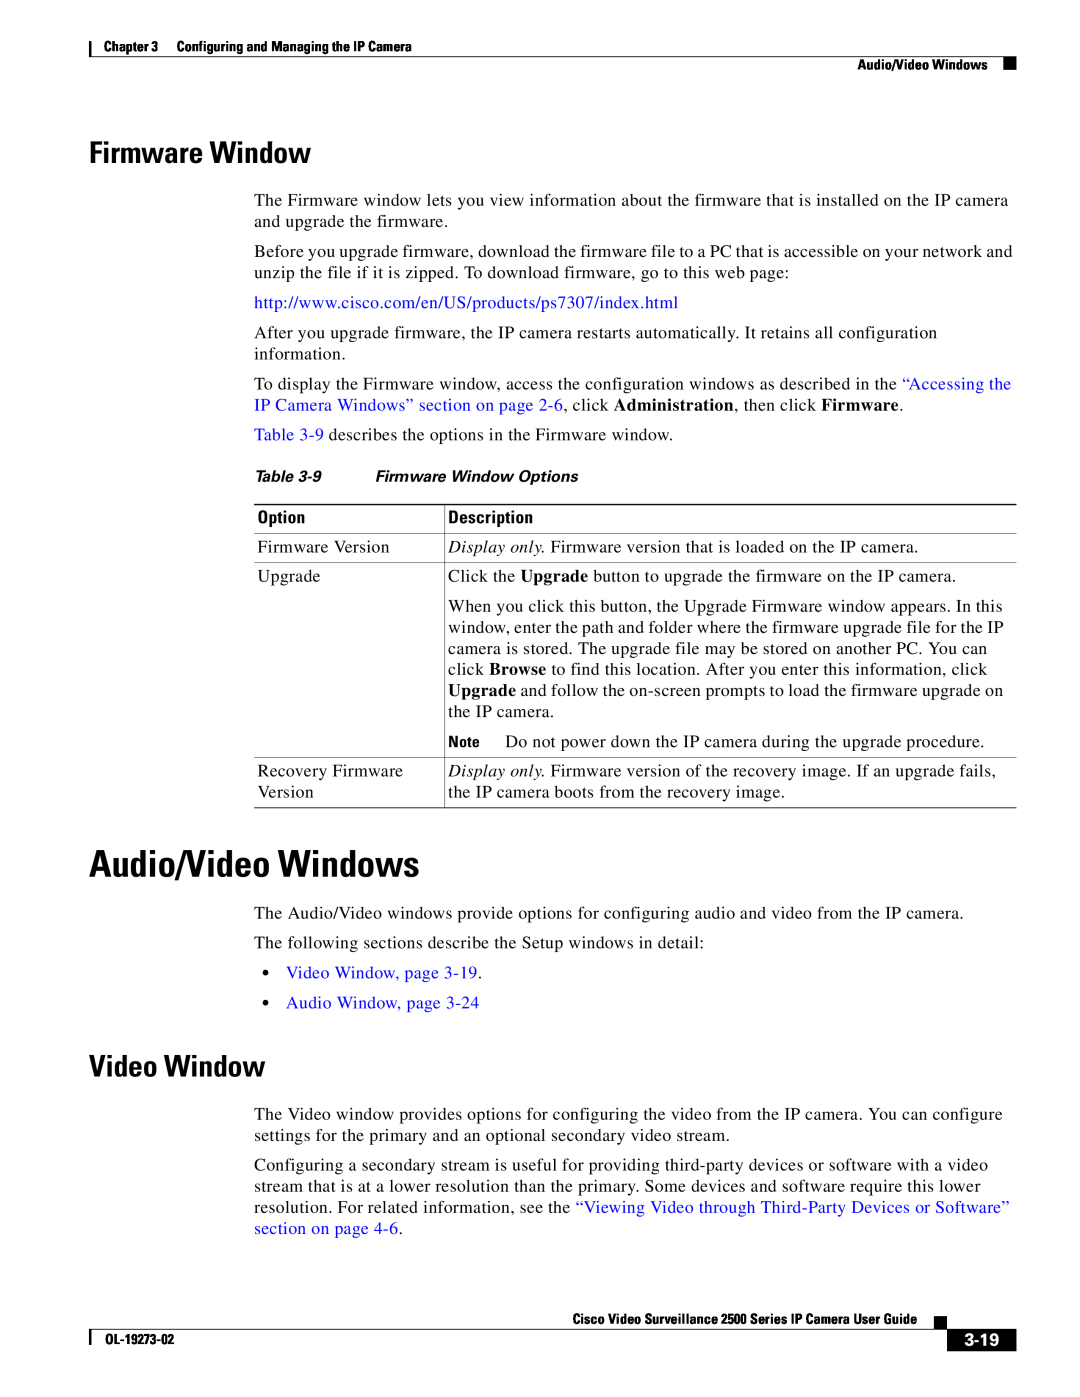 Cisco Systems CIVS-IPC-2500 Audio/Video Windows, Firmware Window, Video Window, page Audio Window, page, 3-19, Option 